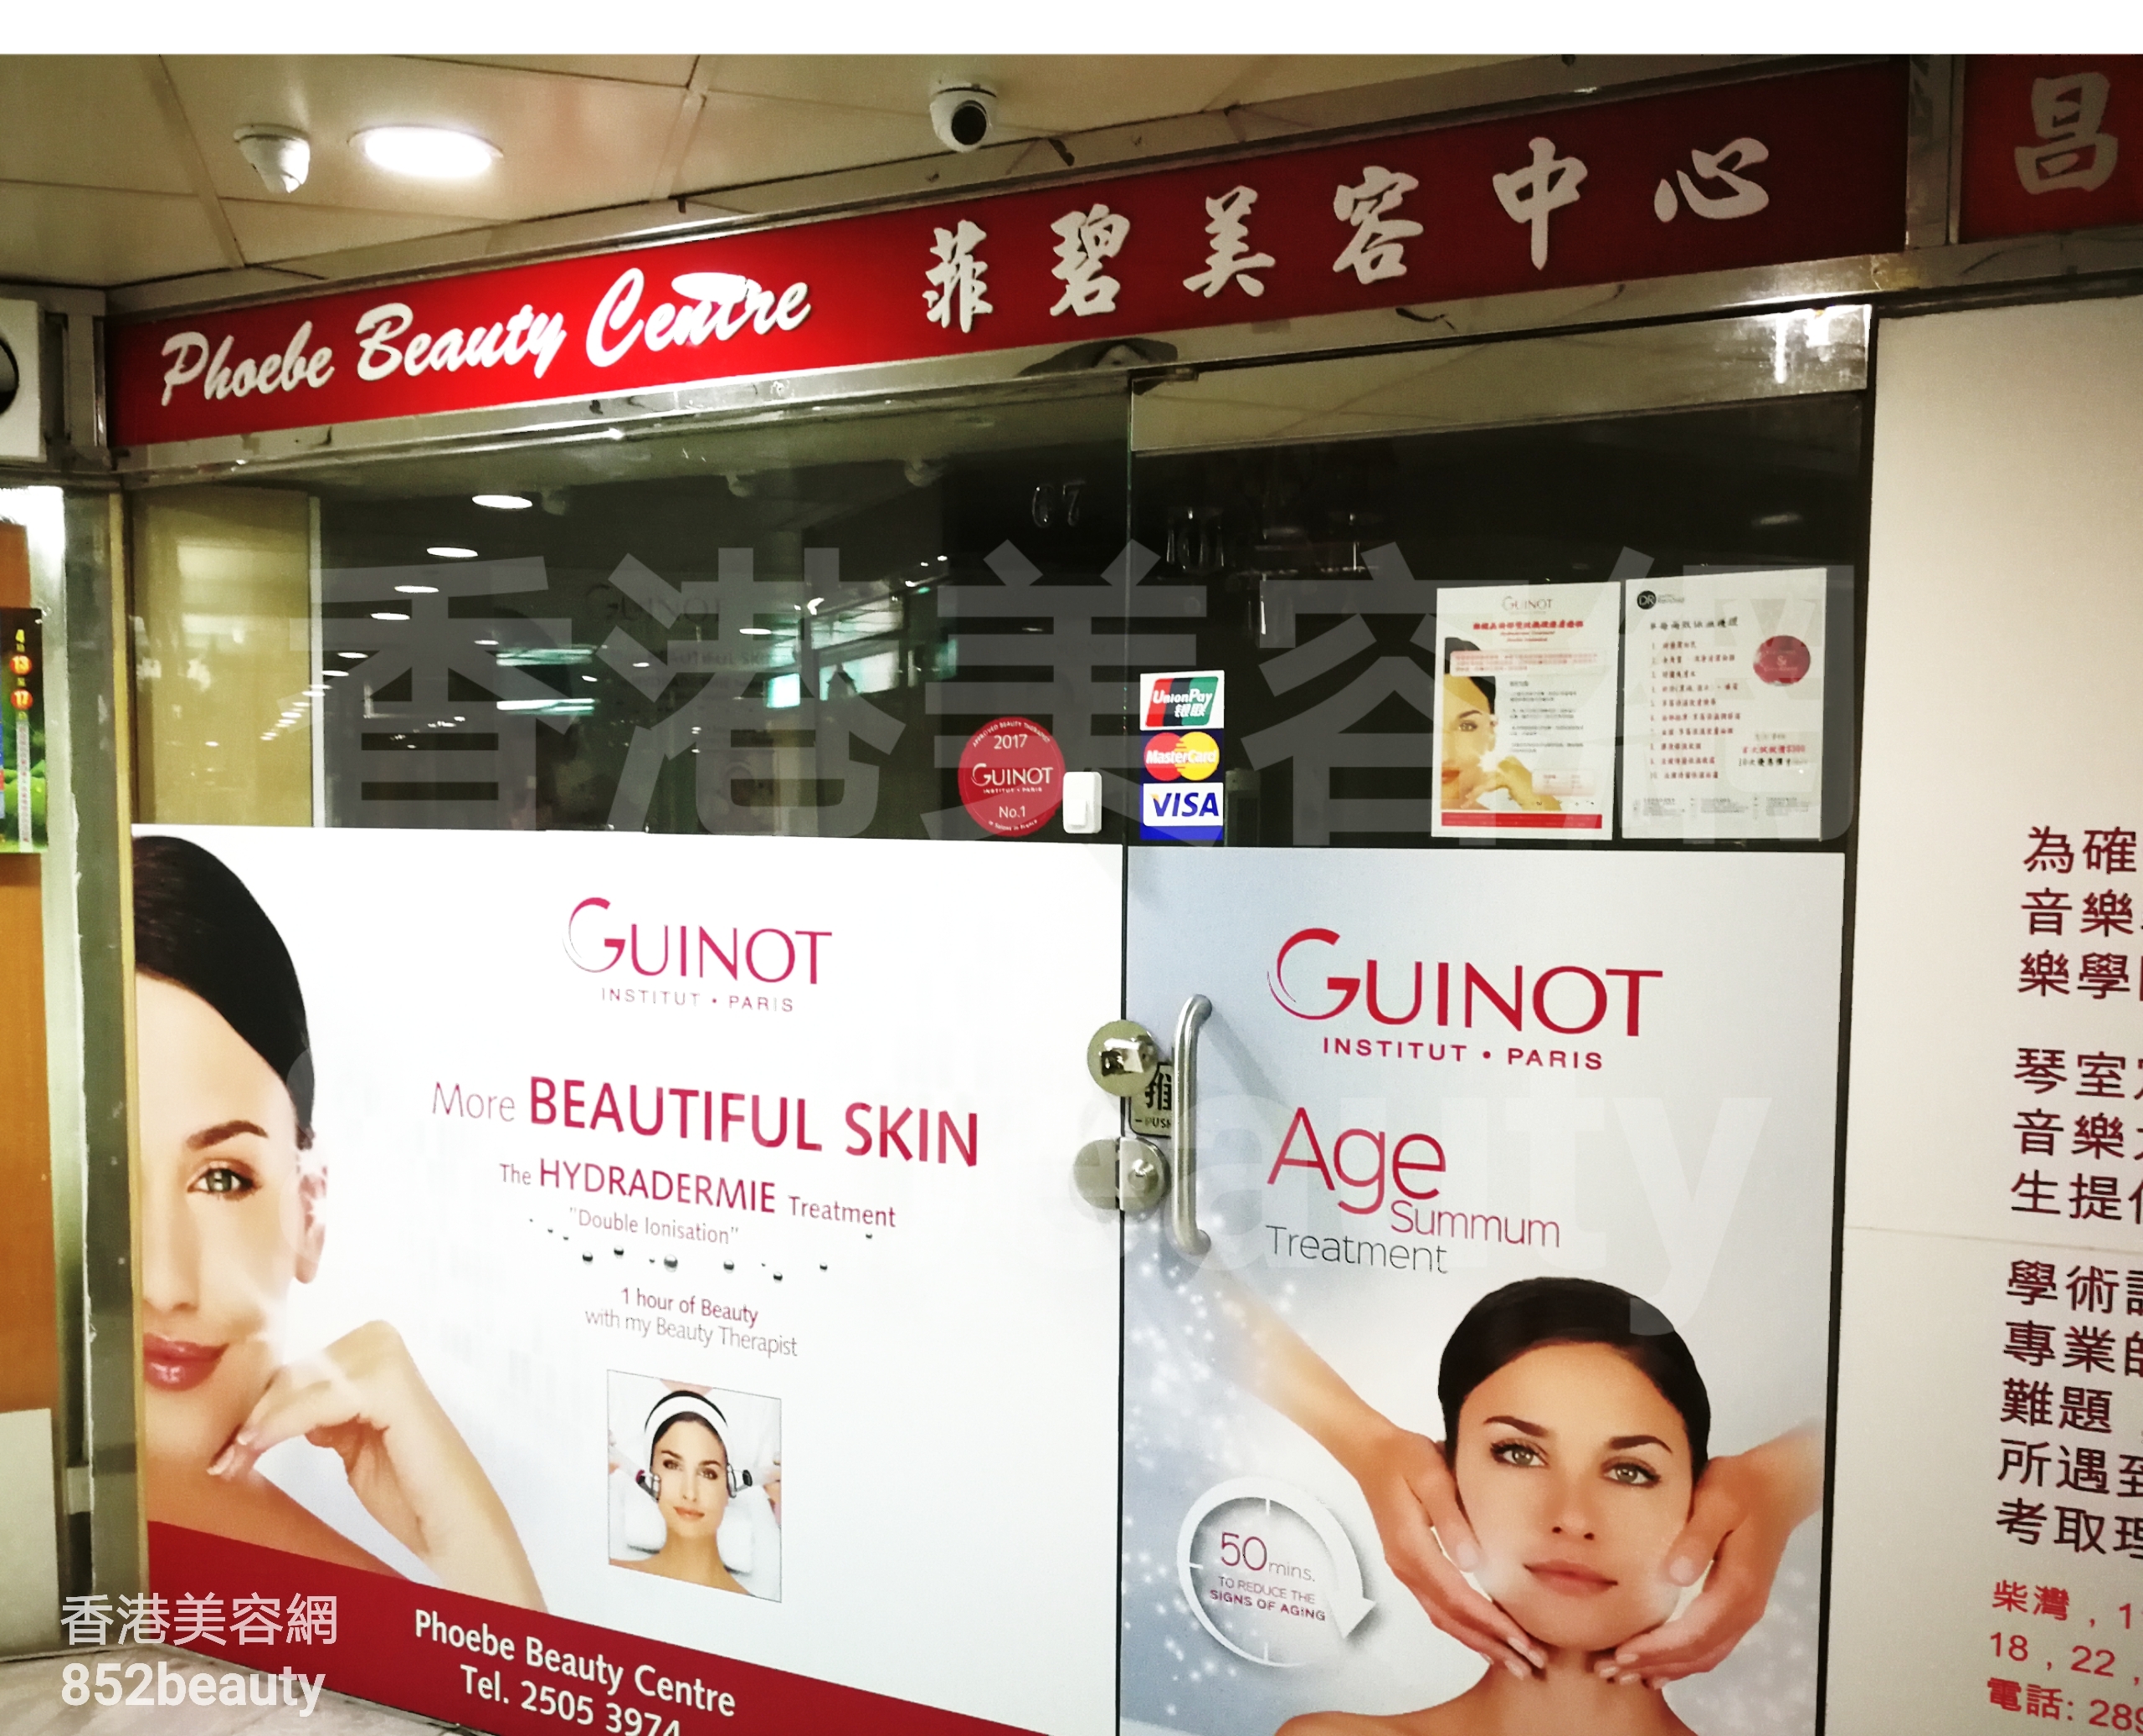 香港美容網 Hong Kong Beauty Salon 美容院 / 美容師: Phoebe Beauty Centre